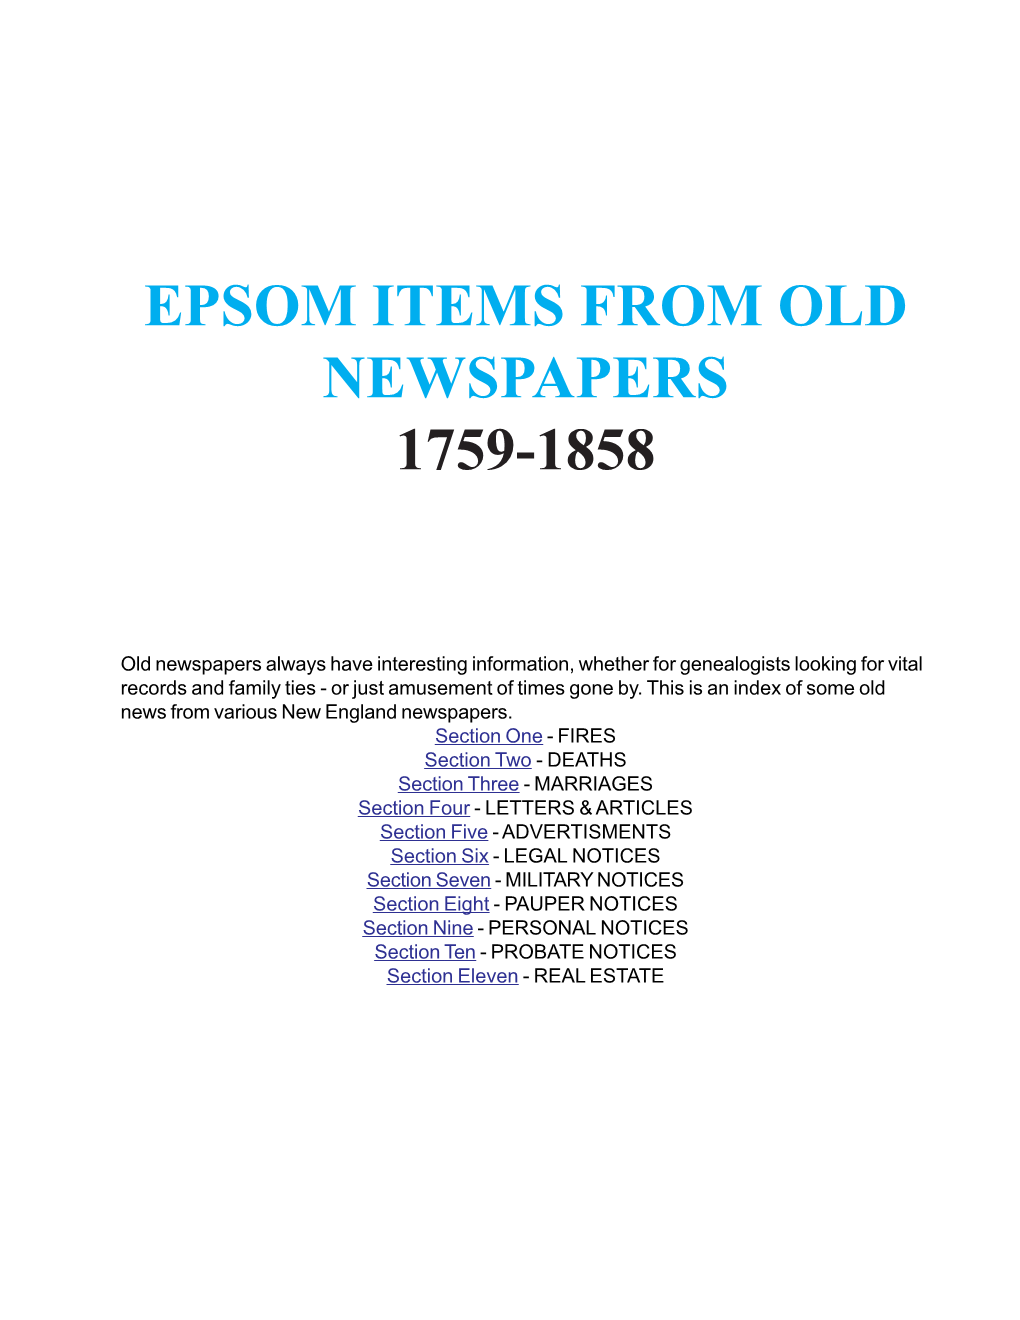 Epsom News Second Edition